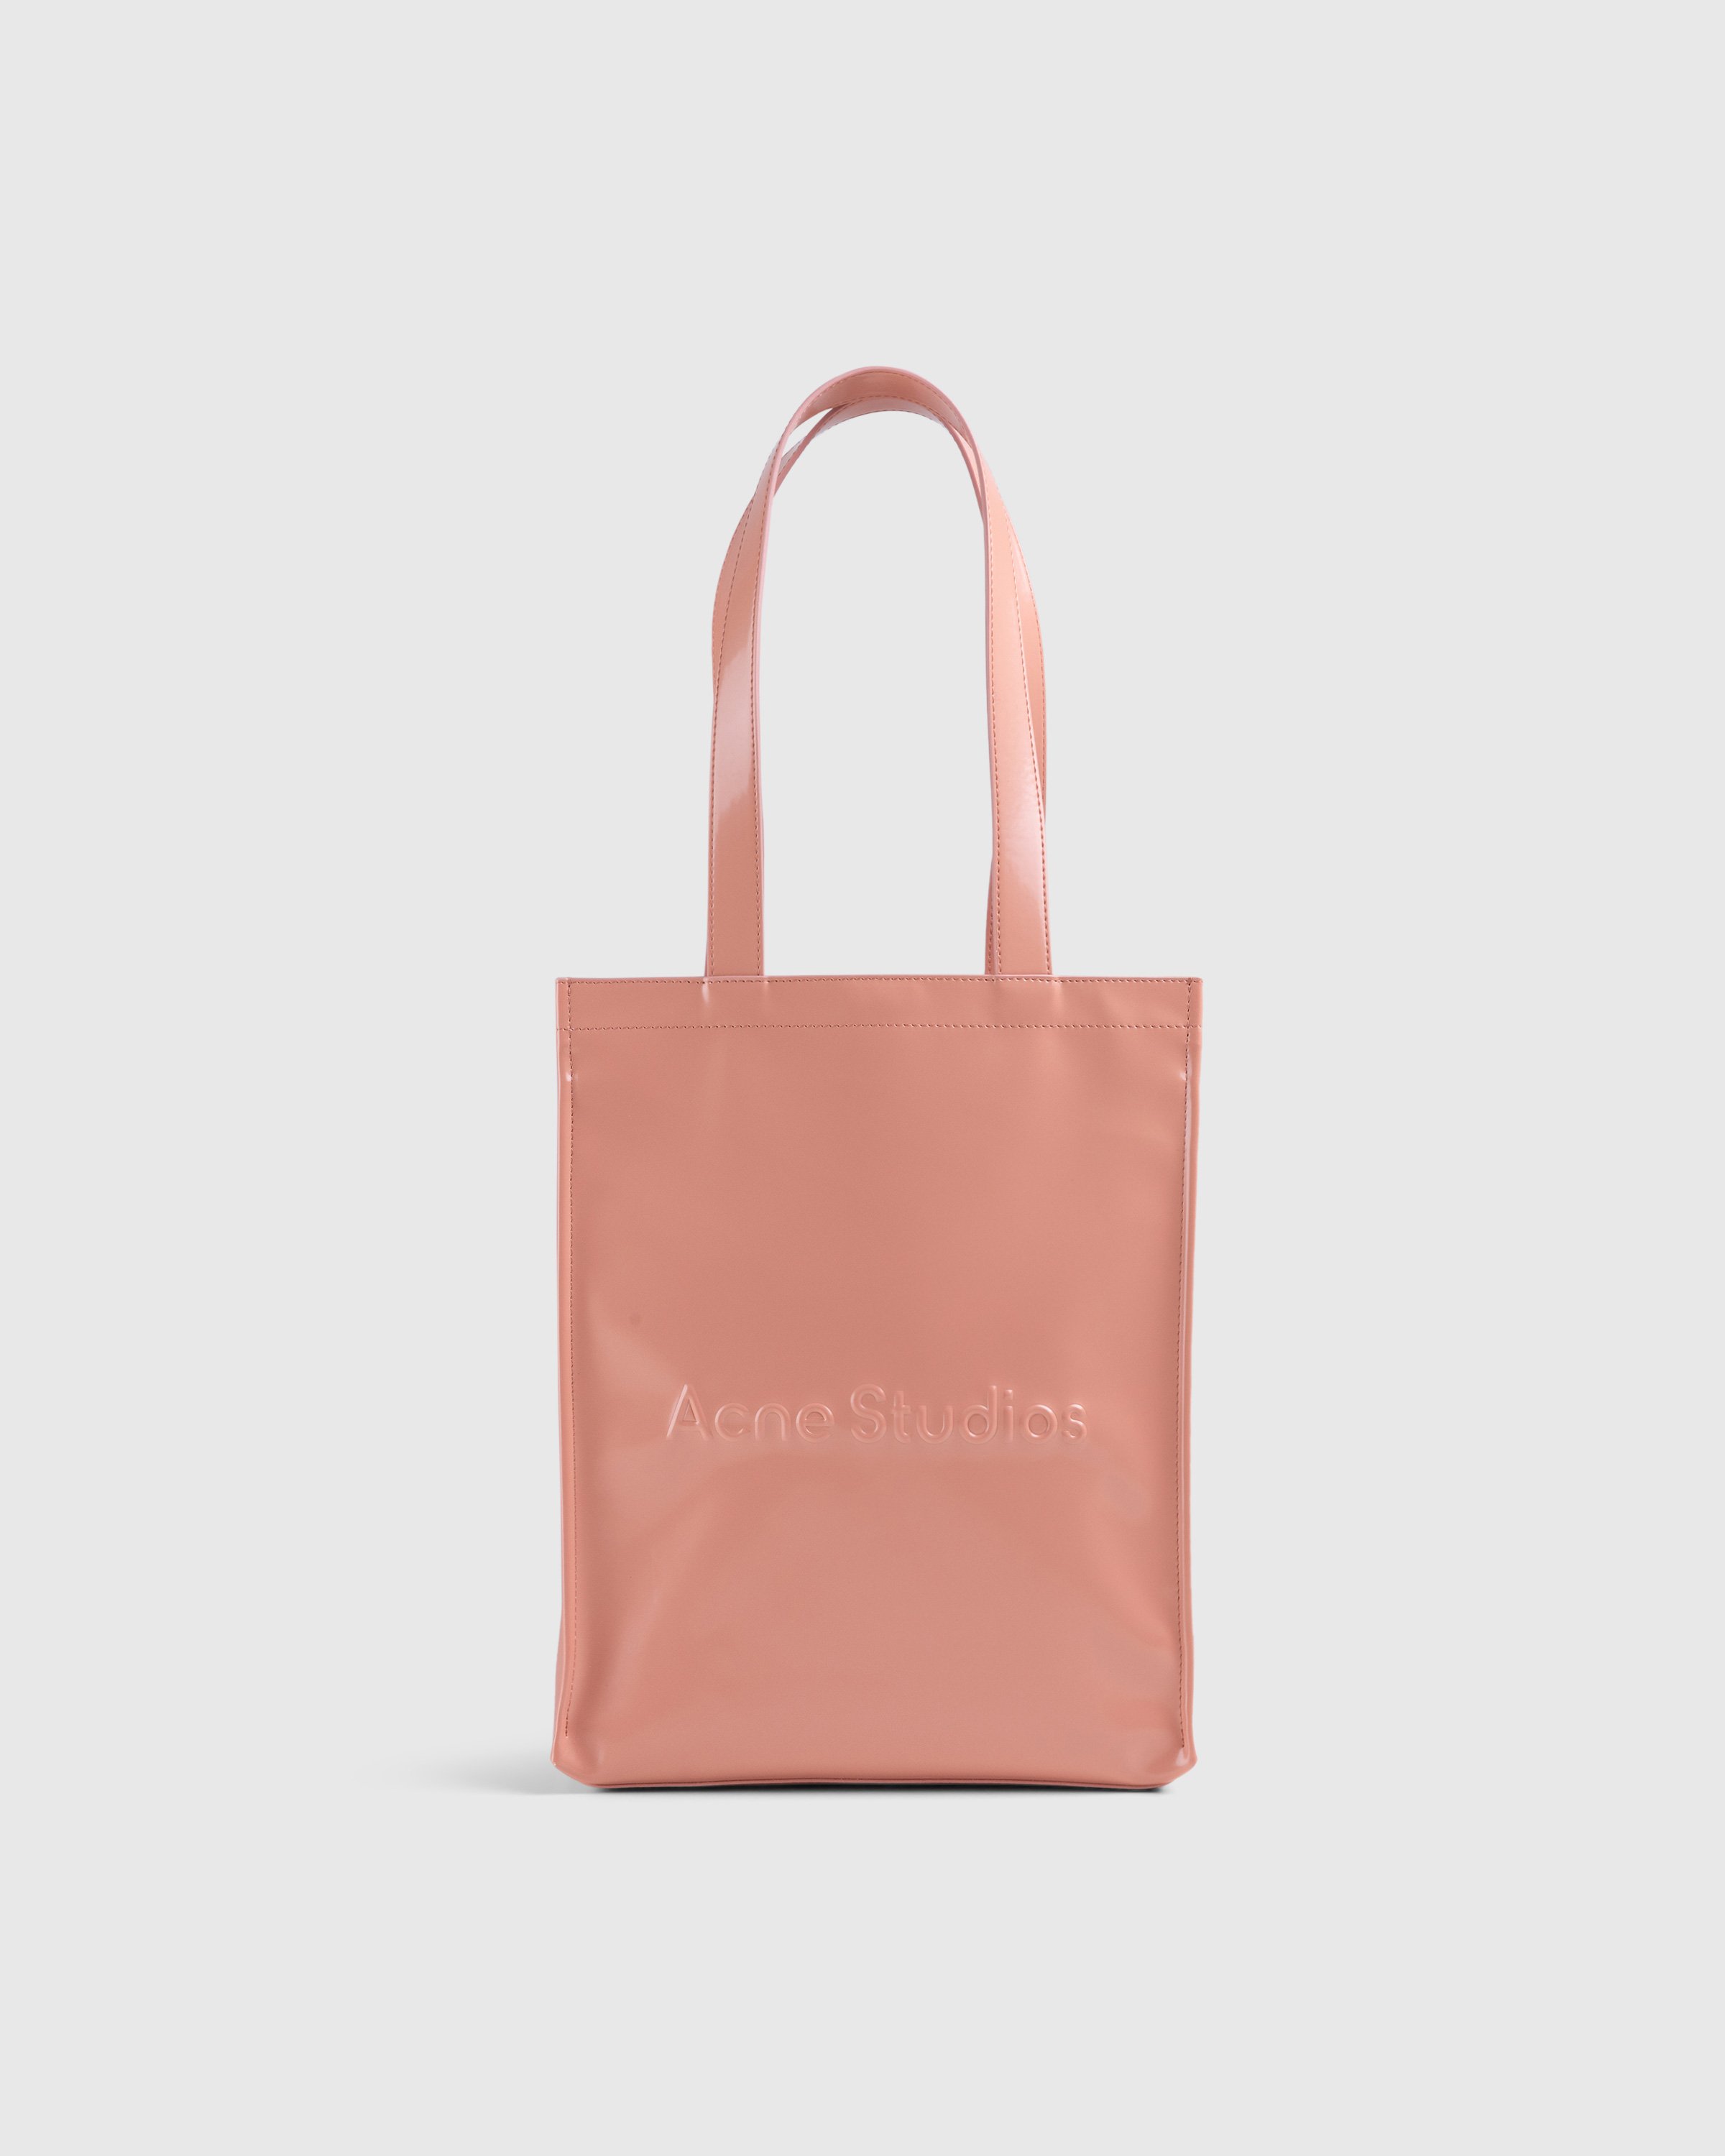 Acne Studios - Logo Shoulder Tote Bag Pink - Accessories - Pink - Image 1